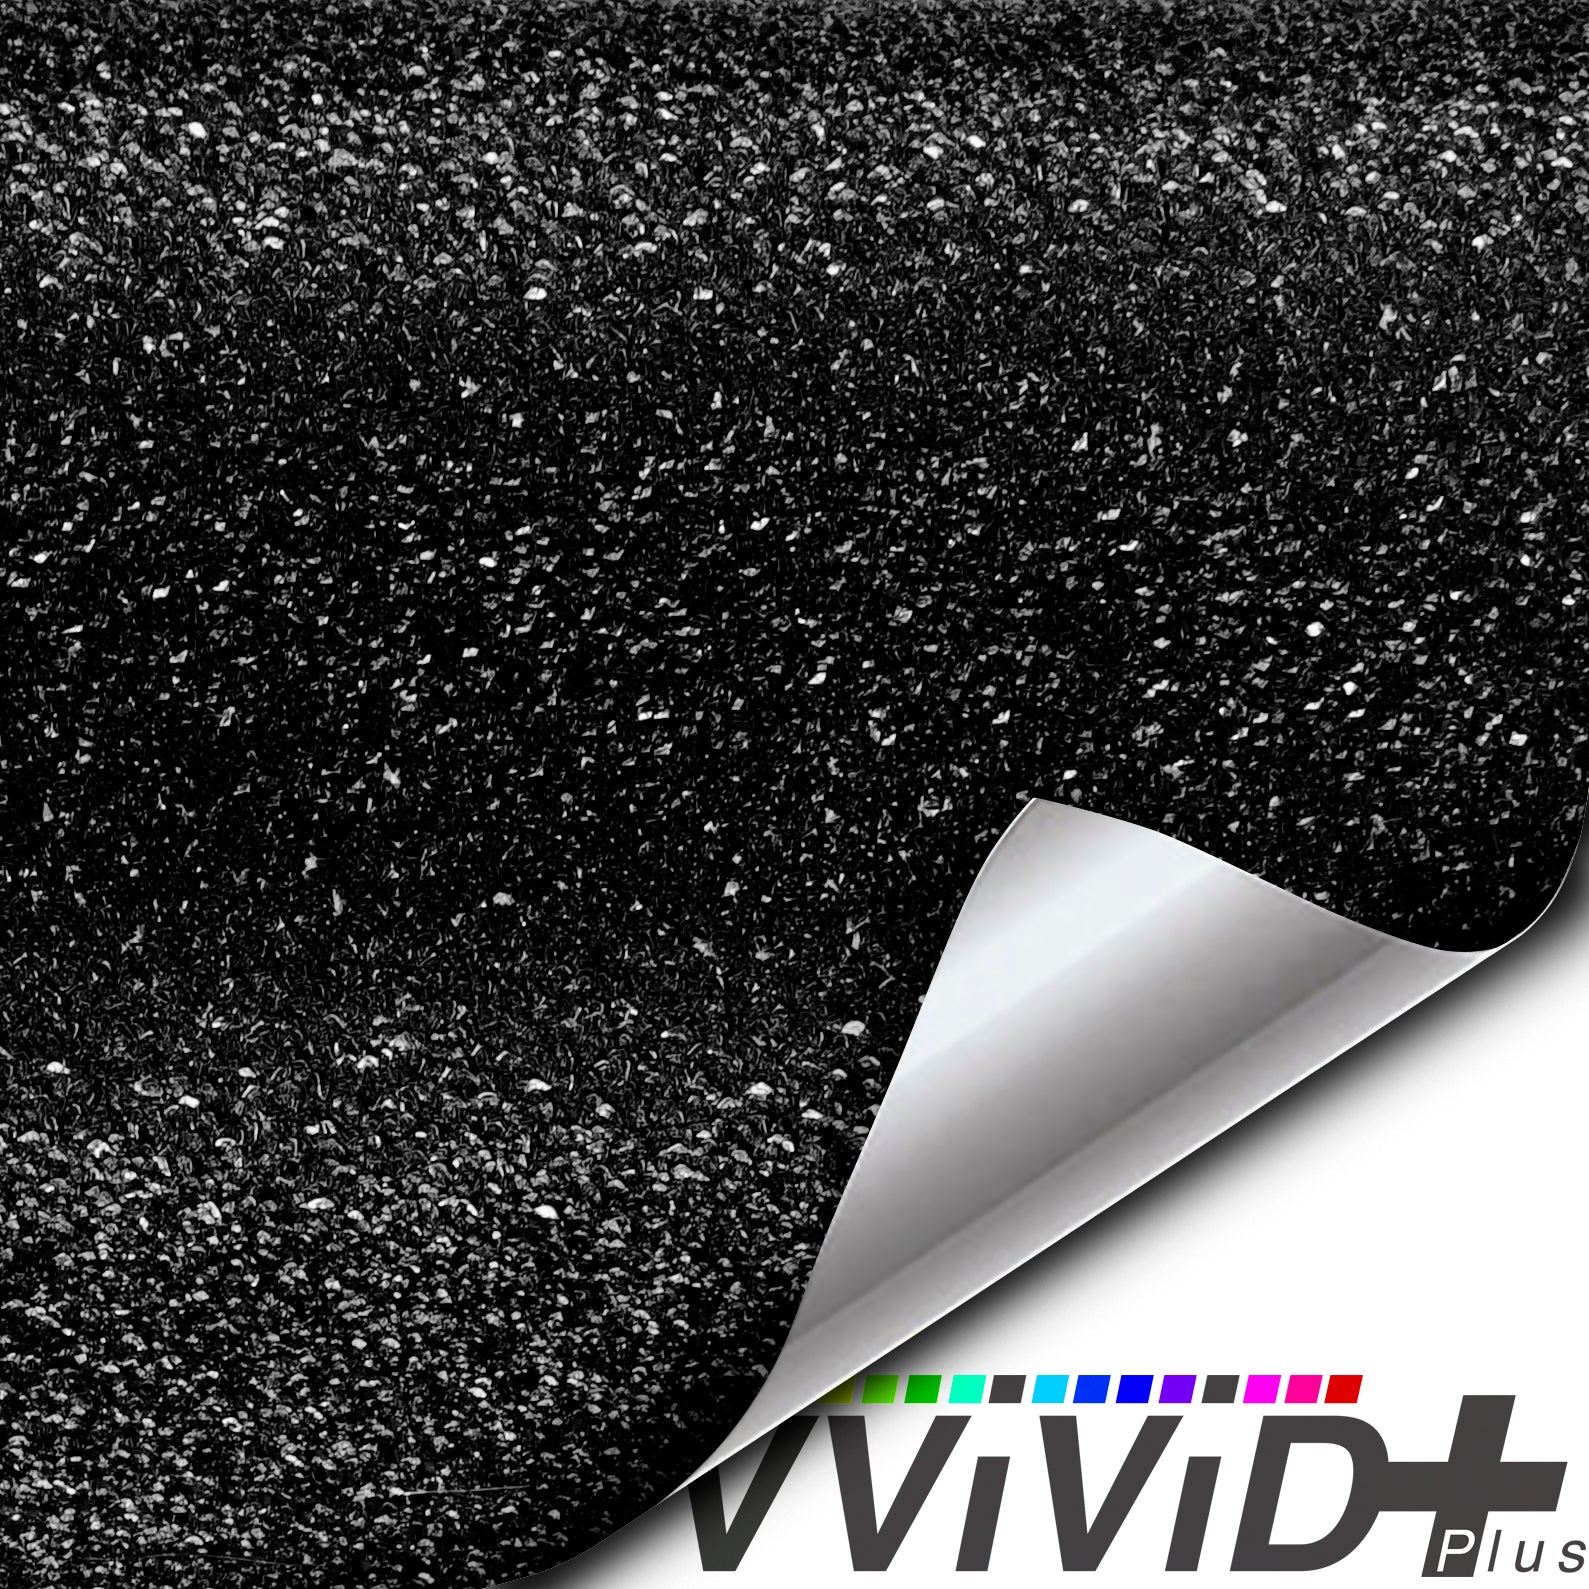  VViViD Matte Black Vinyl Wrap Adhesive Film Air Release Decal  Sheet (6 Inch x 60 Inch) : Automotive